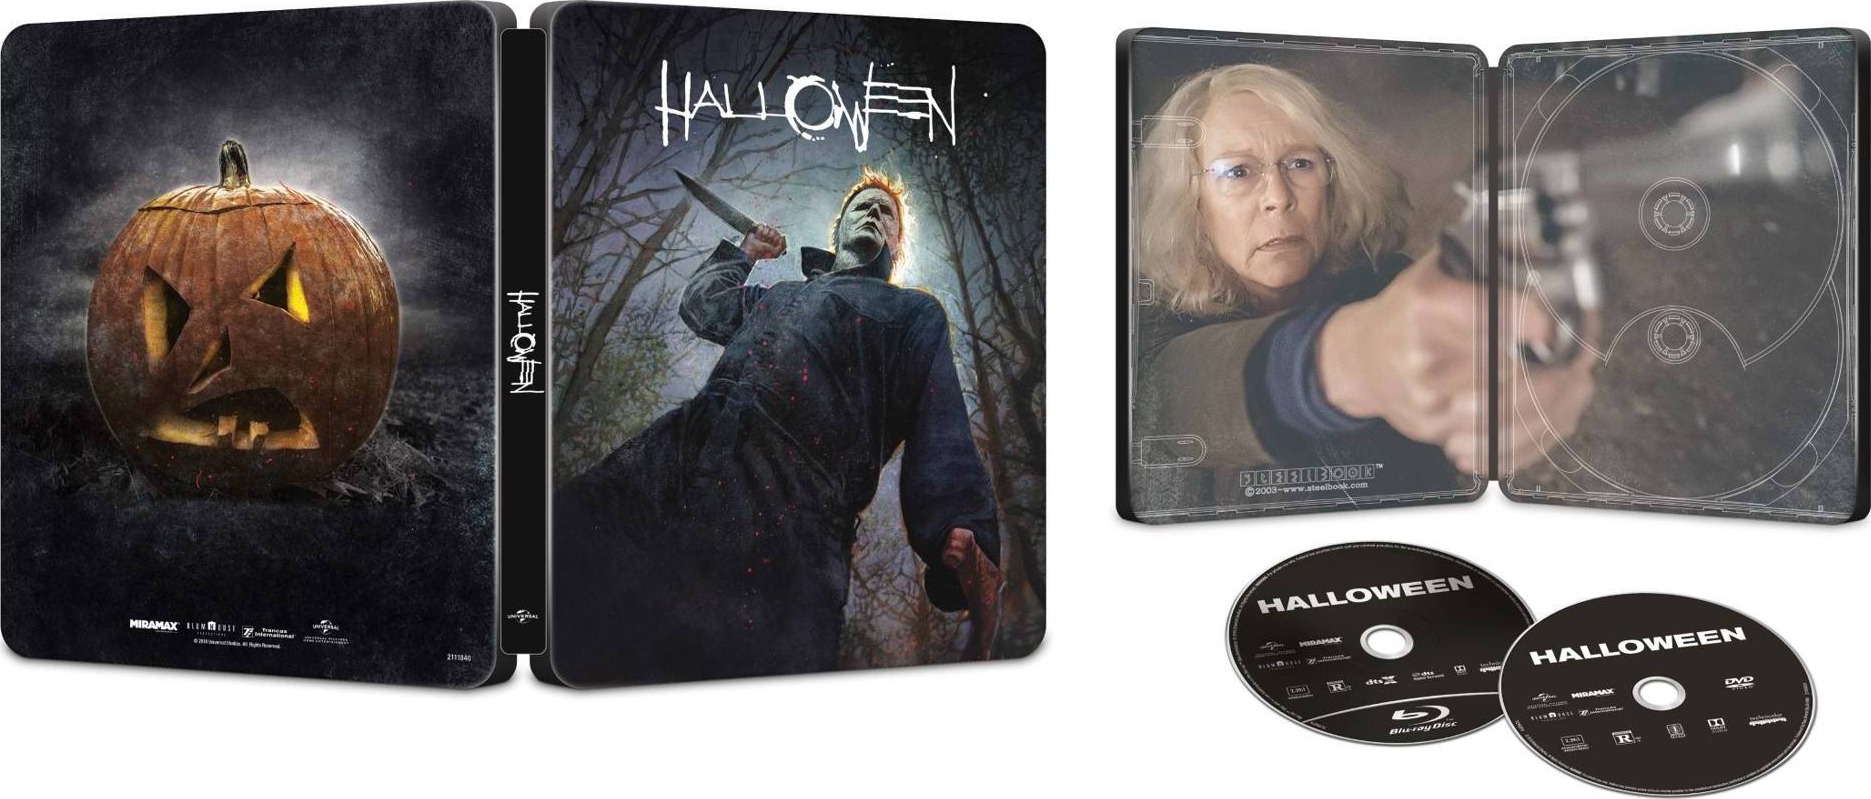 halloween blu ray 2020 Halloween Blu Ray Release Date September 27 2020 Steelbook halloween blu ray 2020